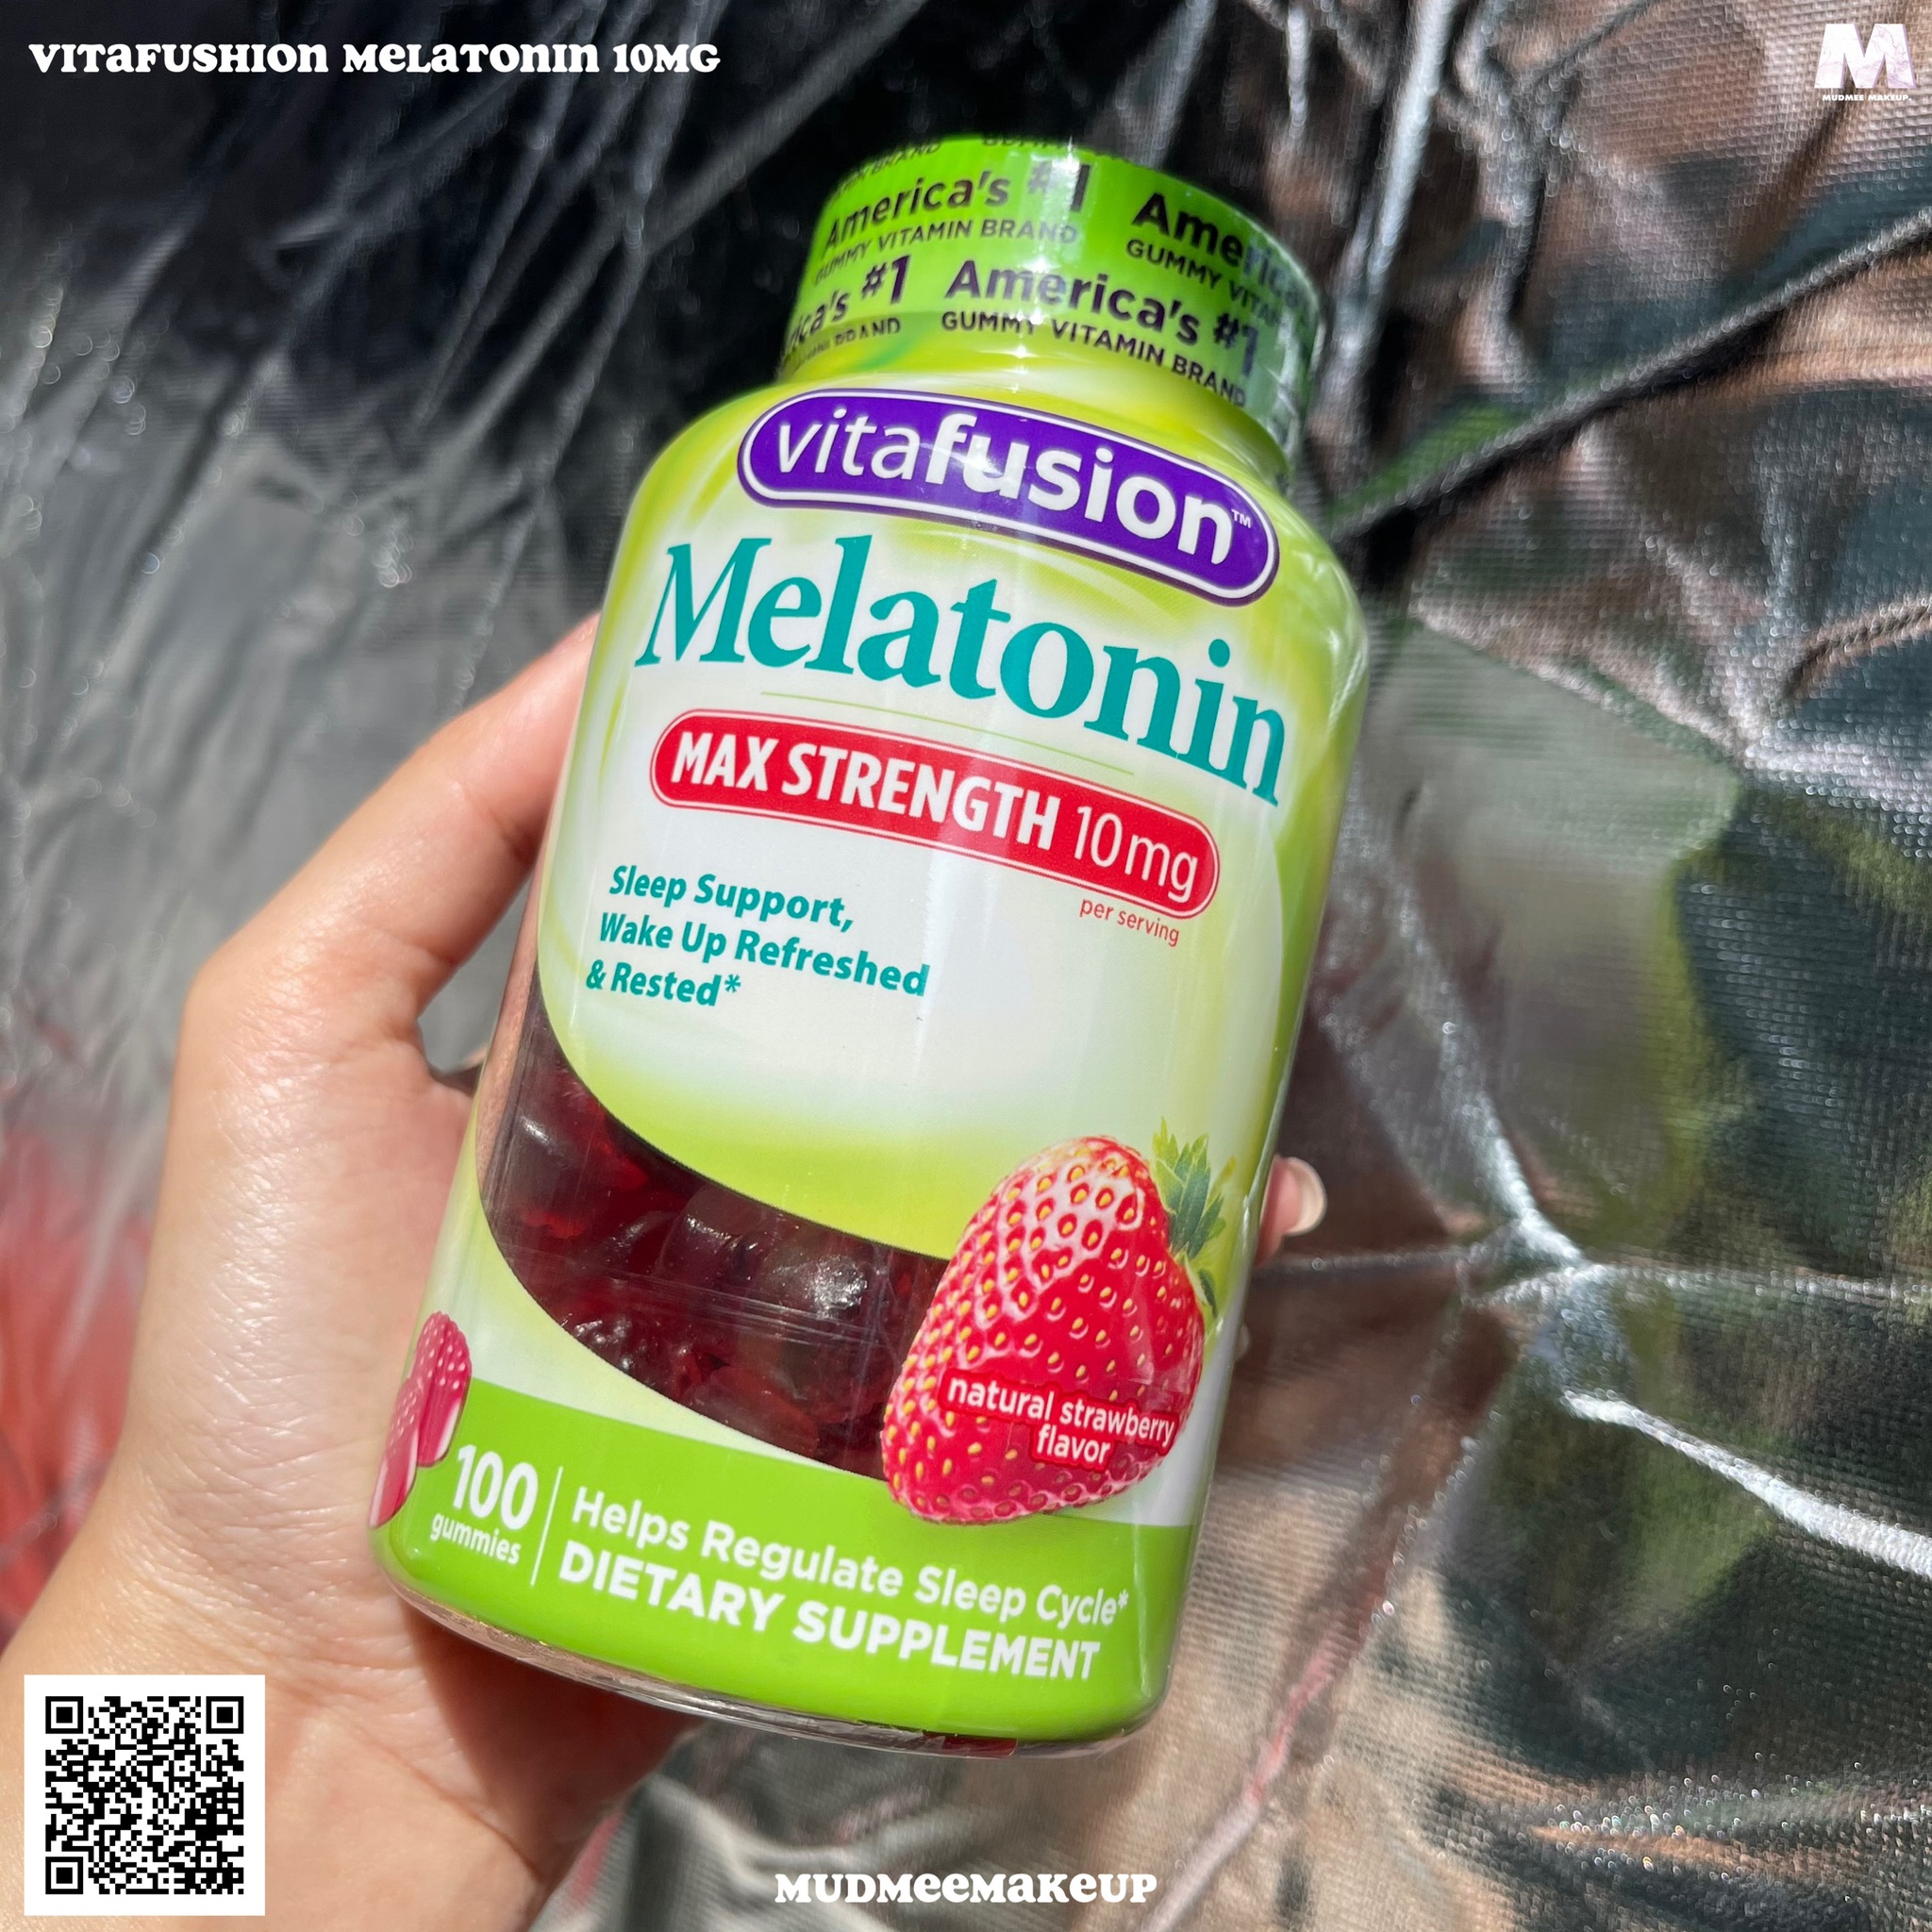 Vitafusion Melatonin Max Strength 10mg. (100 gummies)